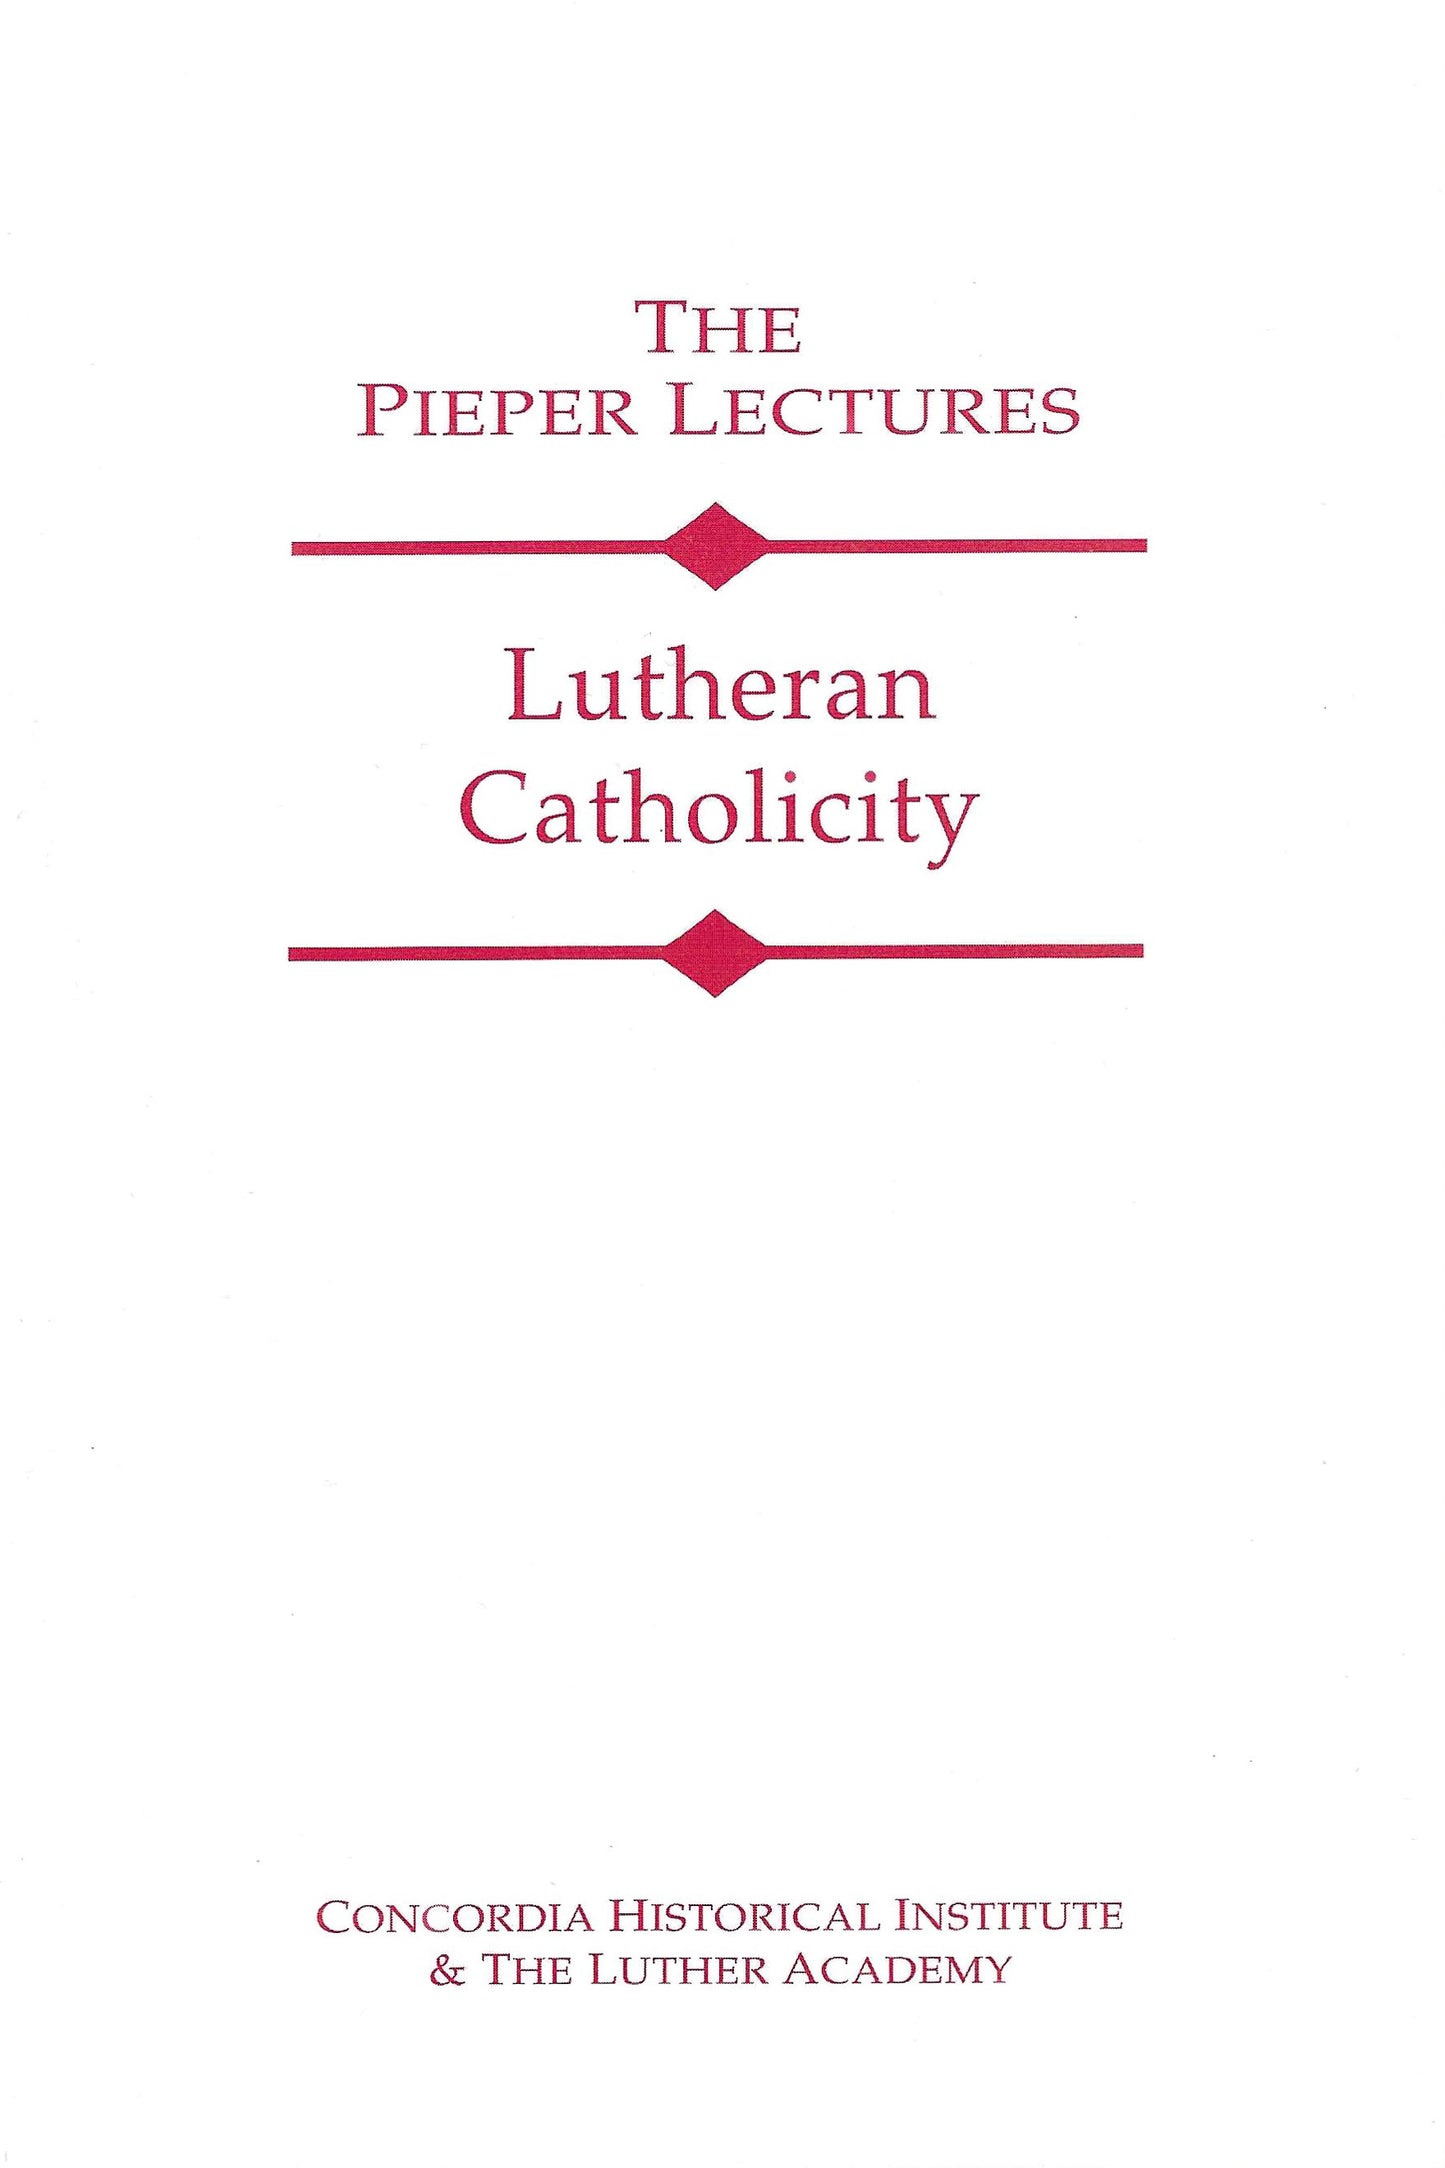 Lutheran Catholicity (Vol. 5, 2001)